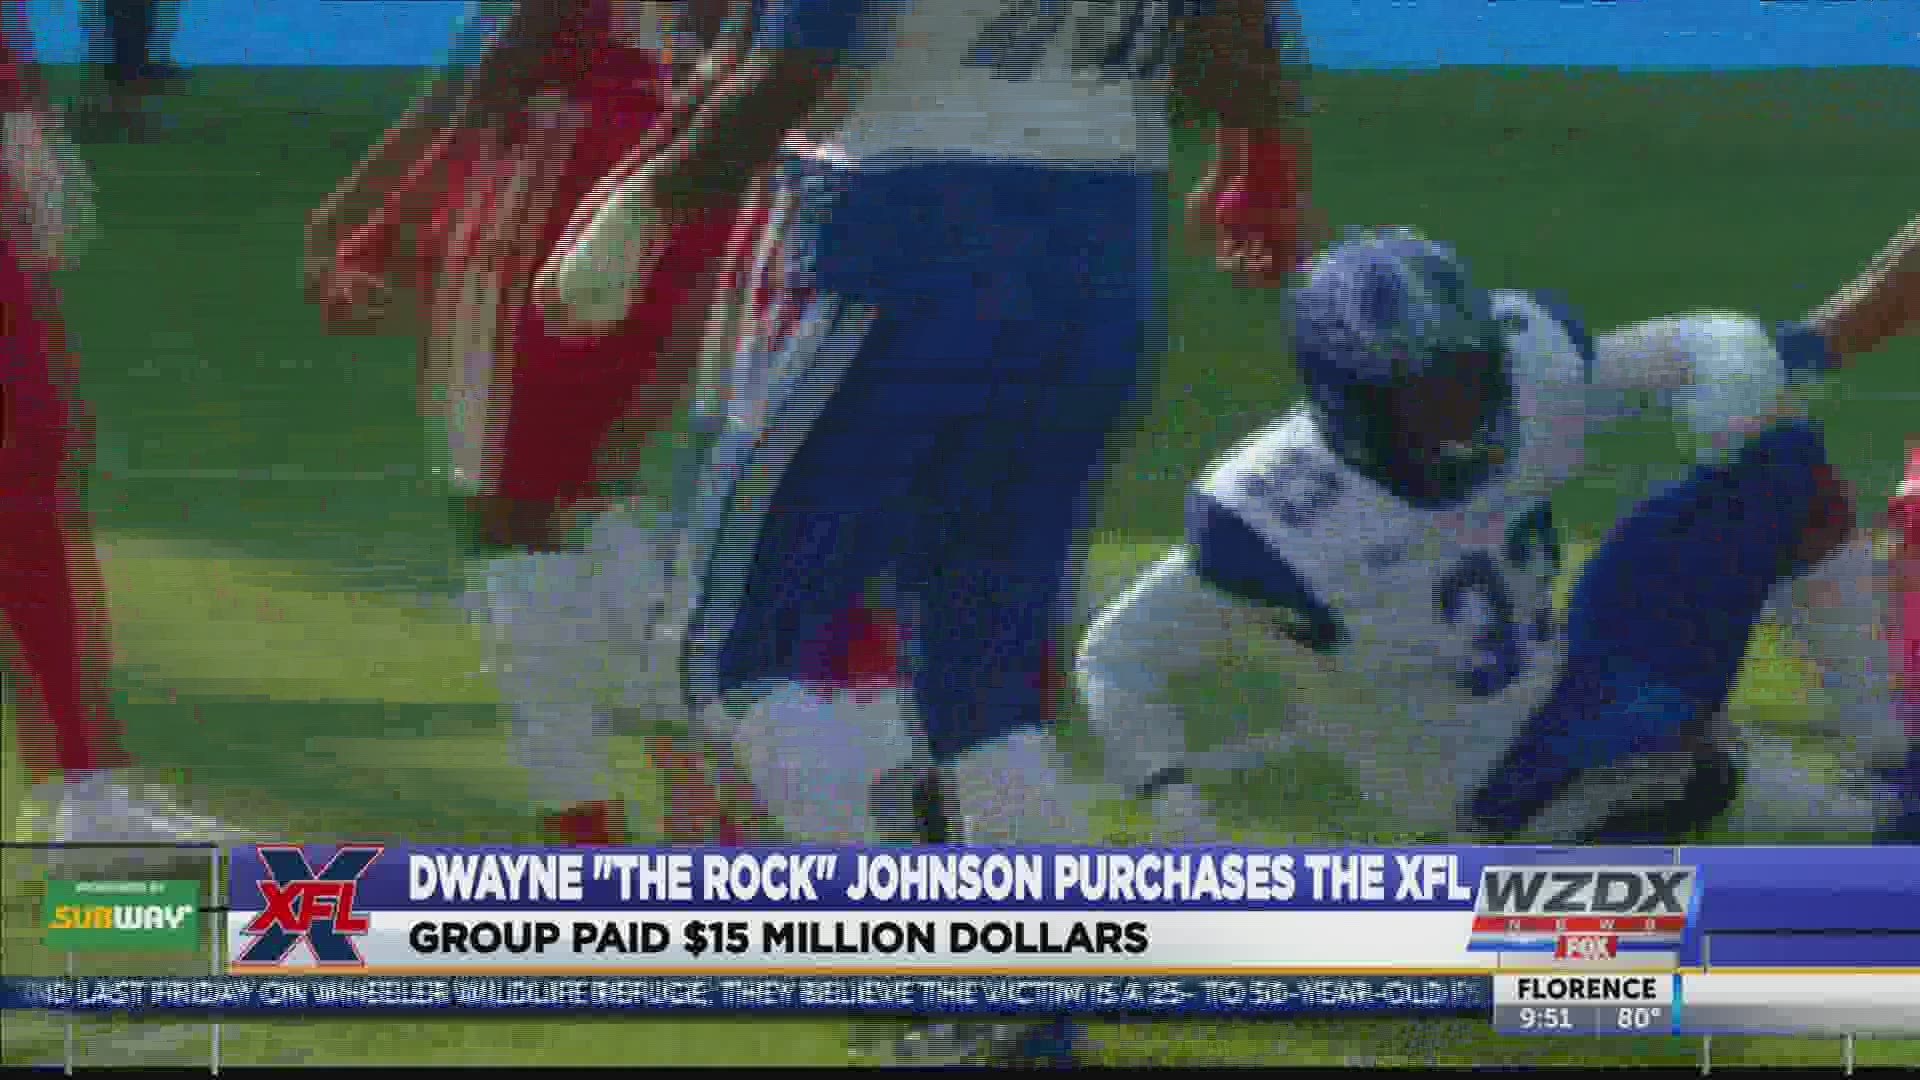 Dwayne The Rock Johnson, RedBird Capital Buy XFL for $15 Million